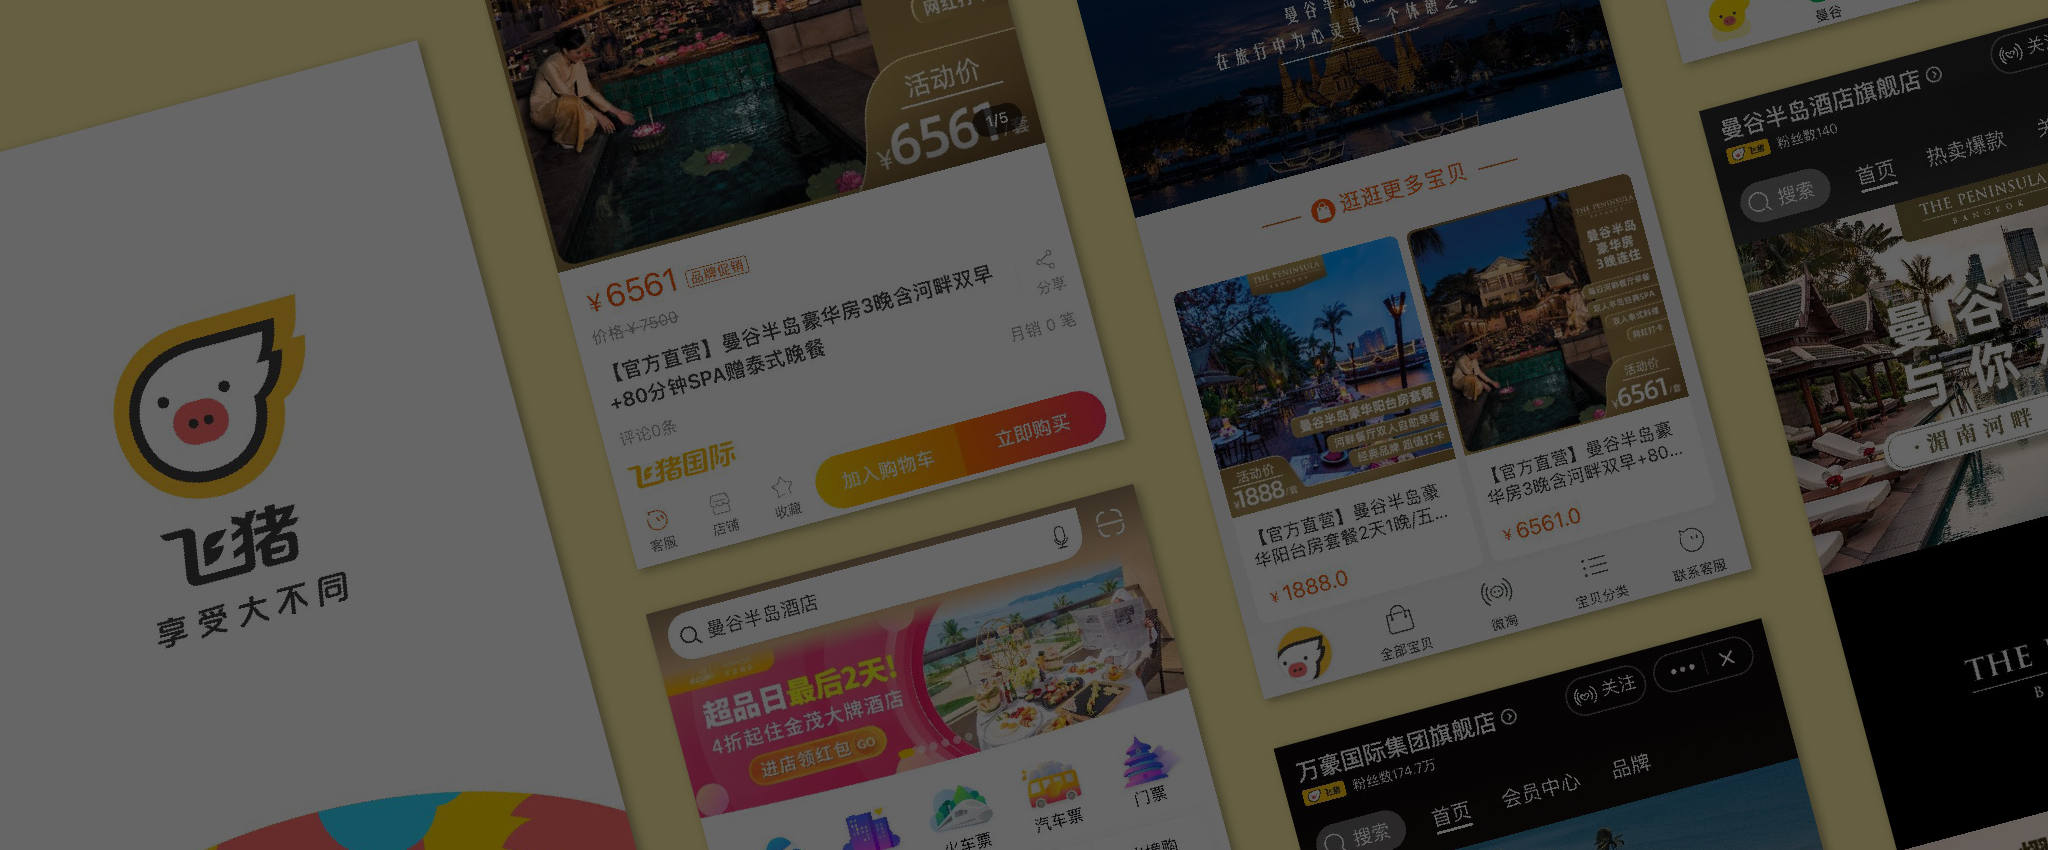 Fliggy Online Travel Marketplace by Alibaba